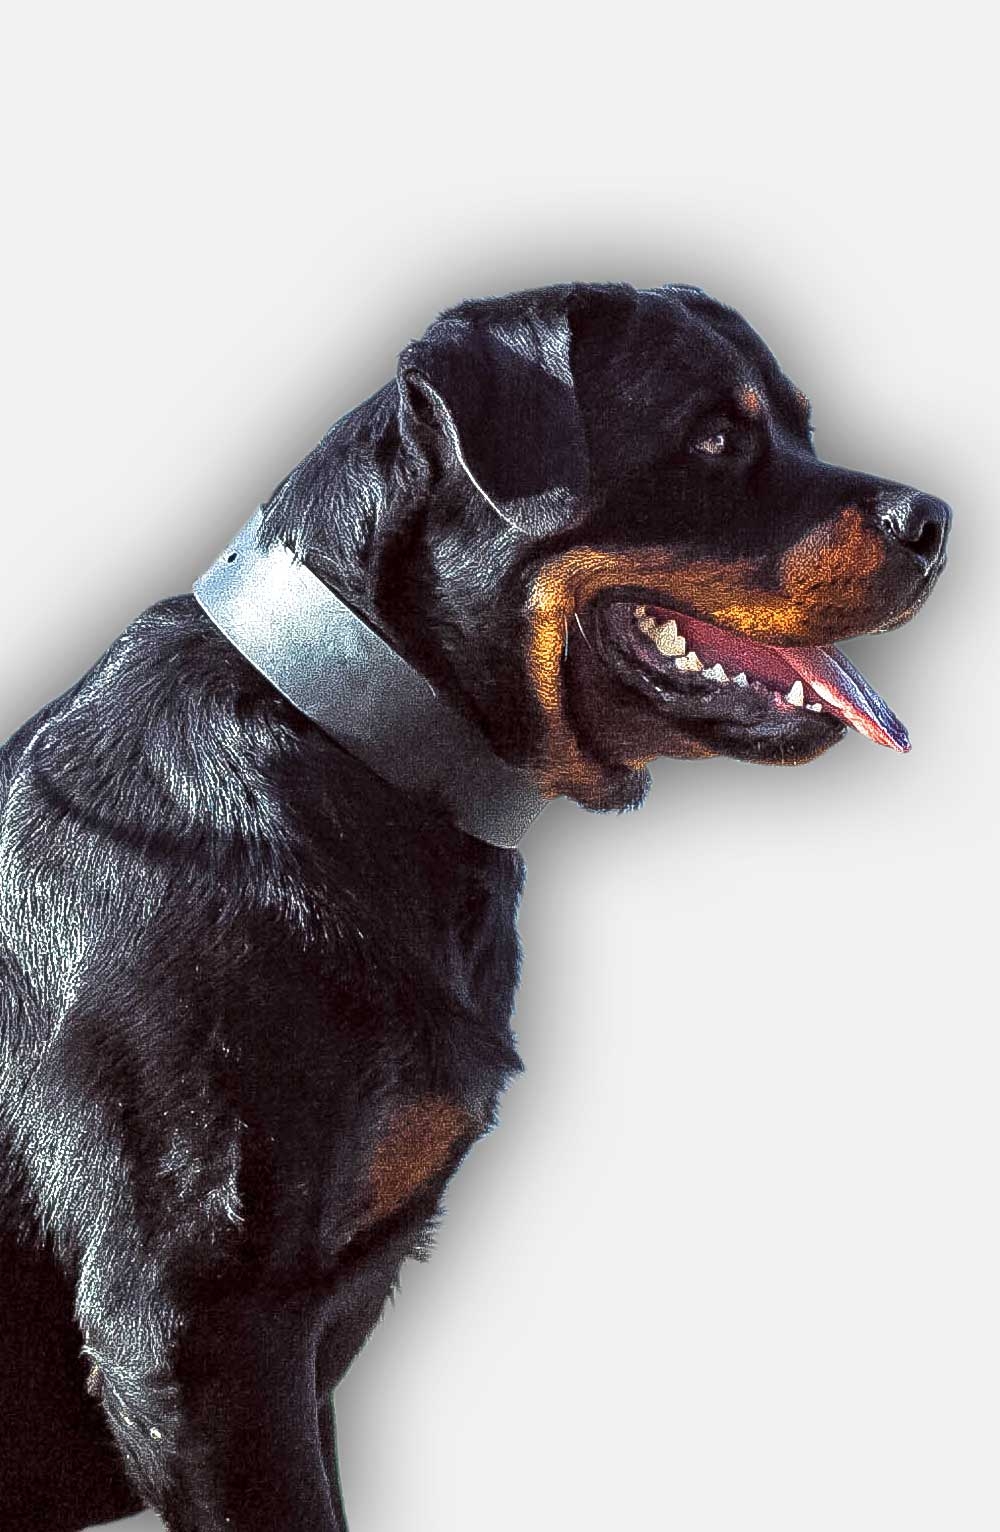 Buy Designer Dog Collars  Get Rottweiler Leather Collar Ovals